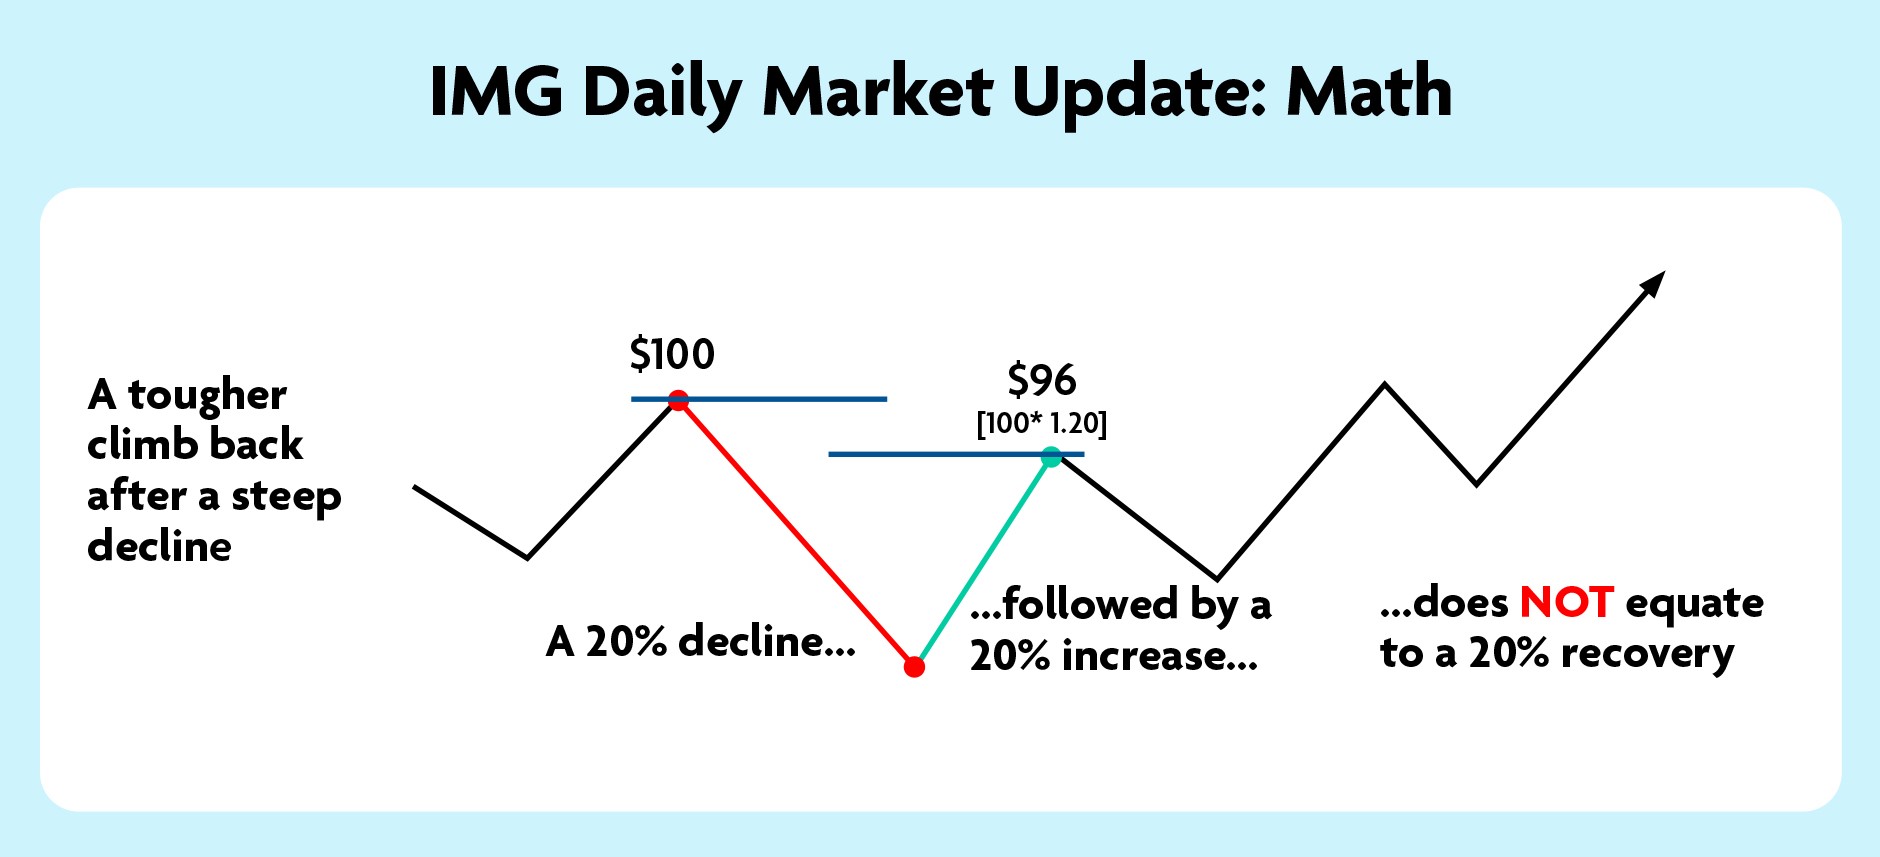 Daily market update